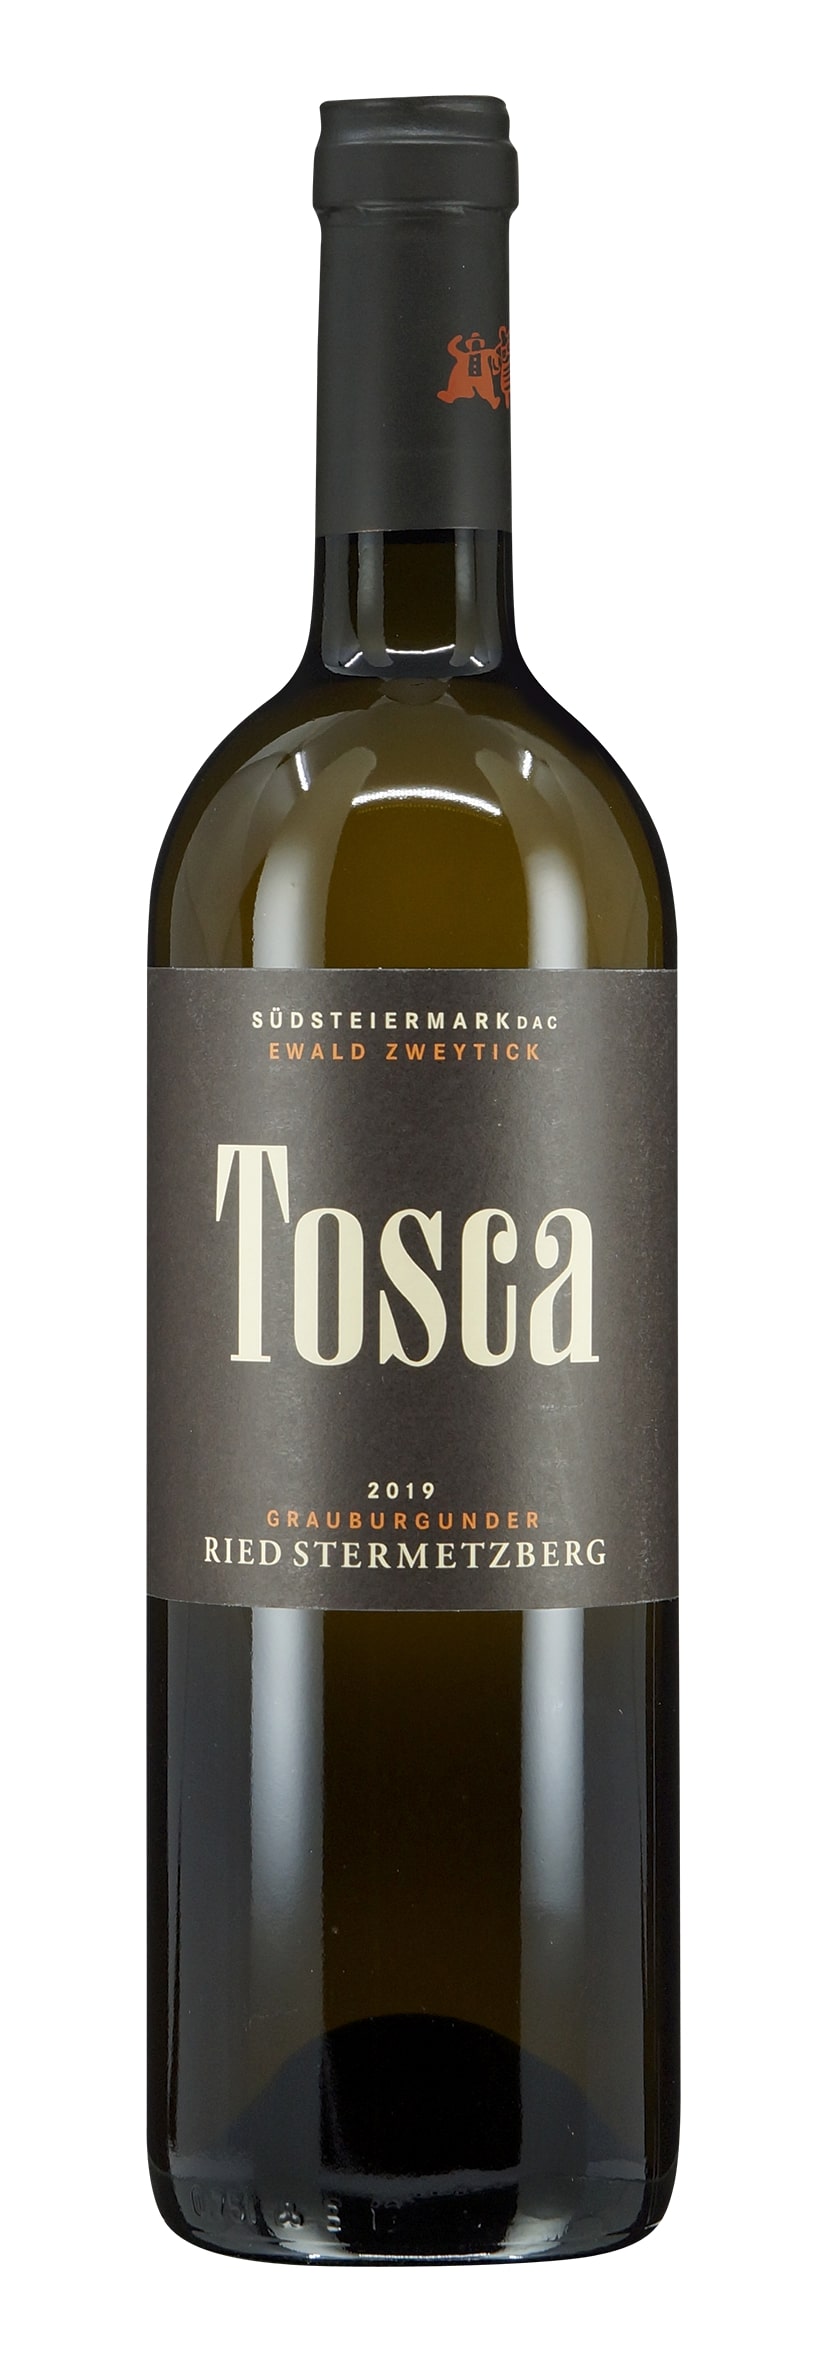 Südsteiermark DAC Ried Stermetzberg Grauburgunder "Tosca" 2019